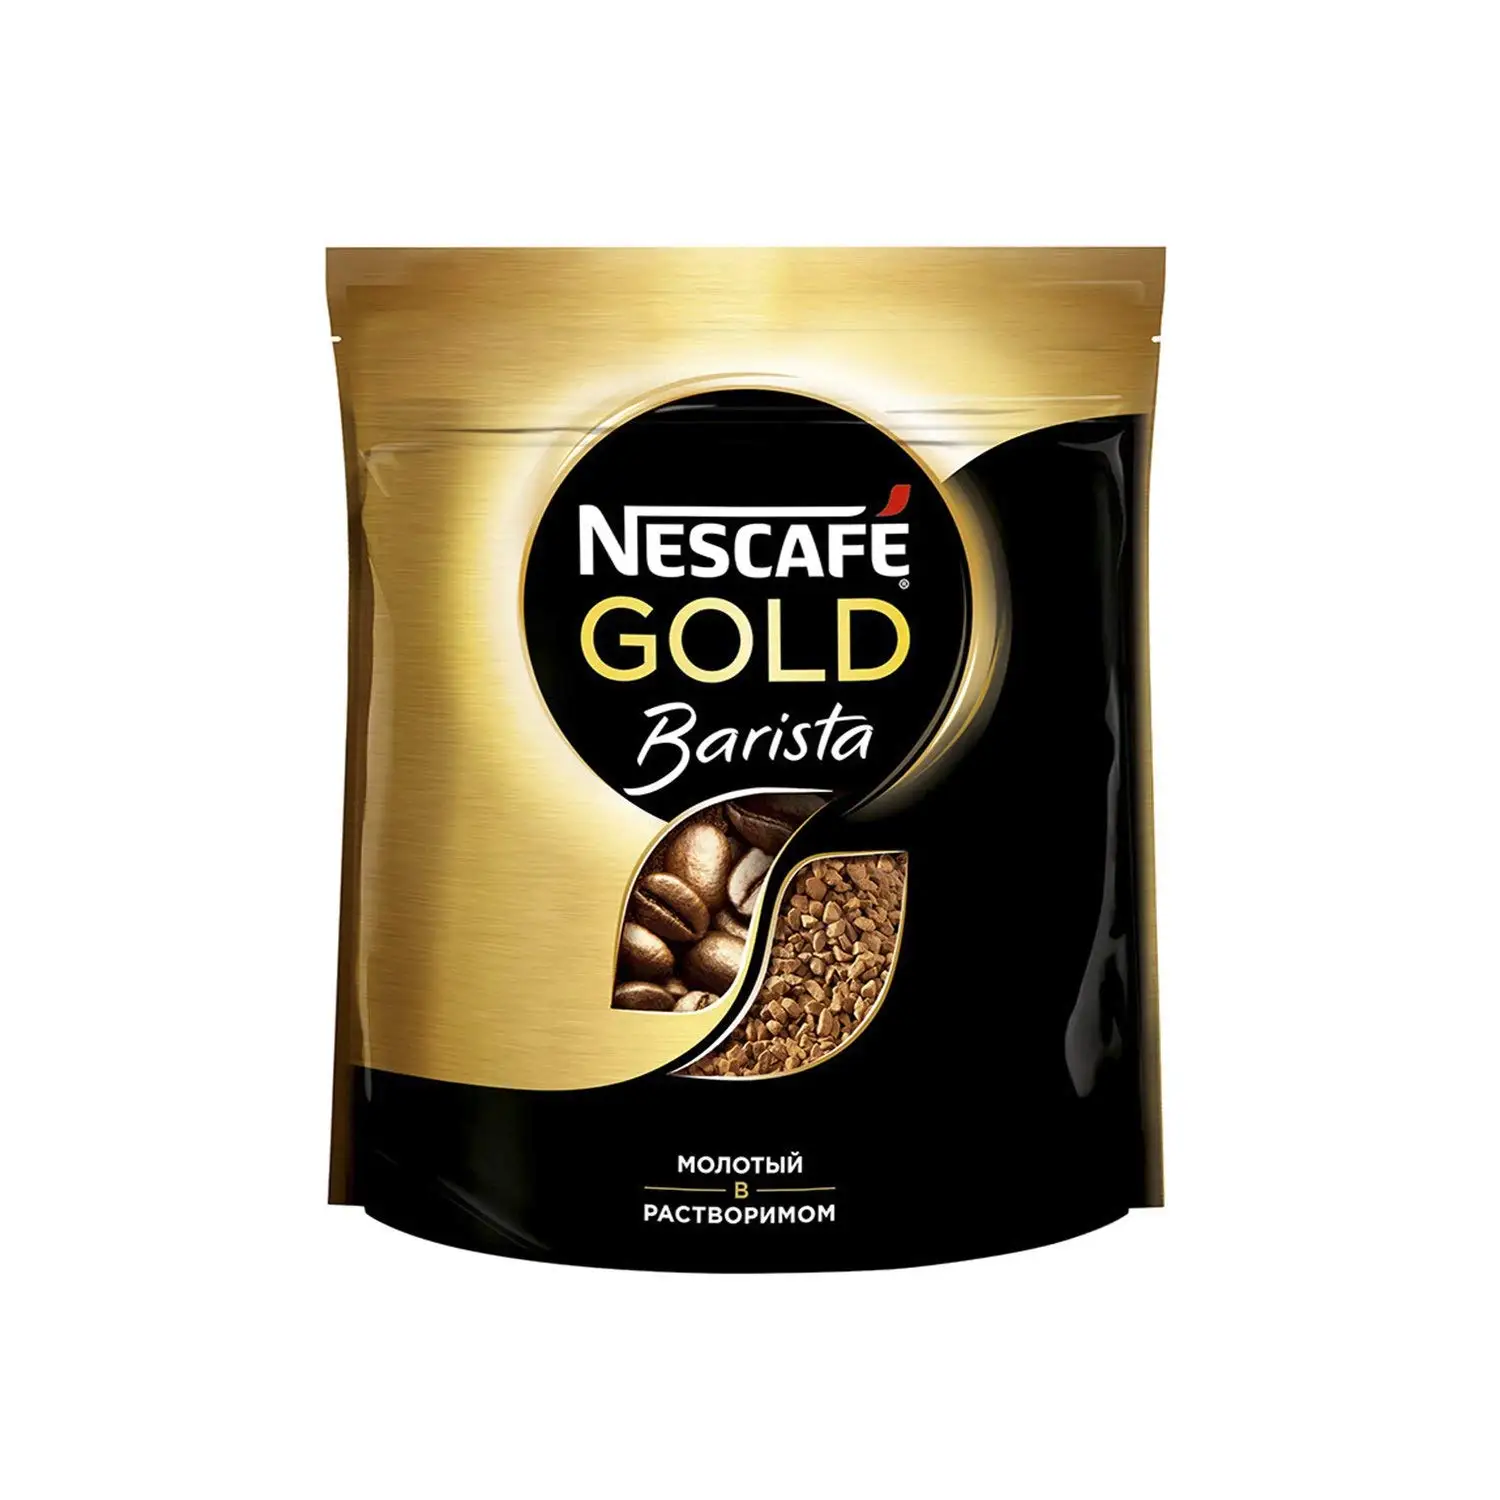 Nescafe gold пакет. Кофе Nescafe Gold 75г. Кофе Нескафе Голд 75г м/у. Кофе 75 г Голд бариста стайл «Нескафе». Кофе Нескафе Голд 75гр.